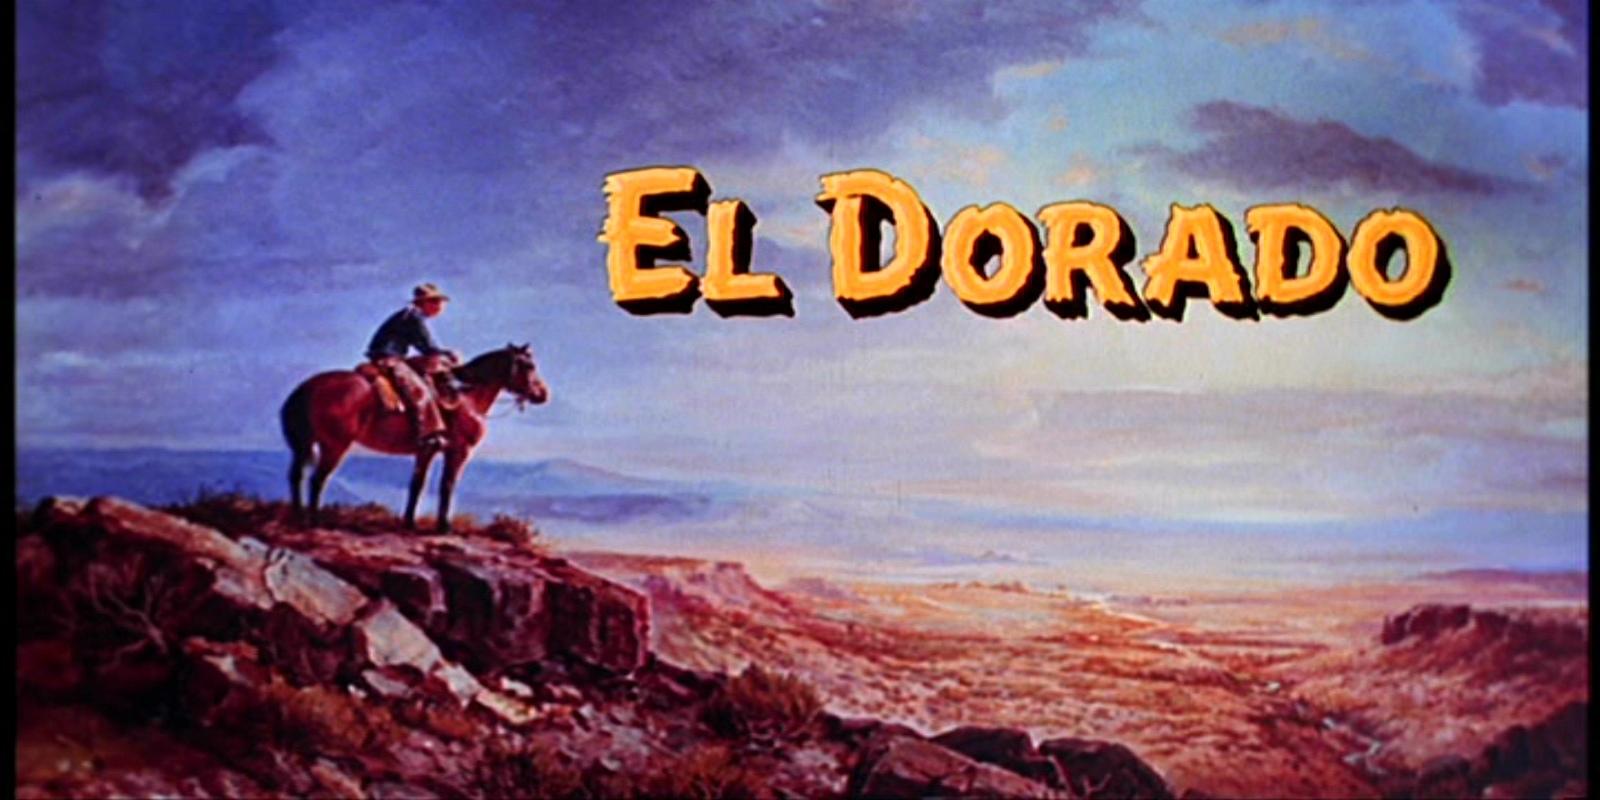 El Dorado at 1024 x 768 size wallpapers HD quality